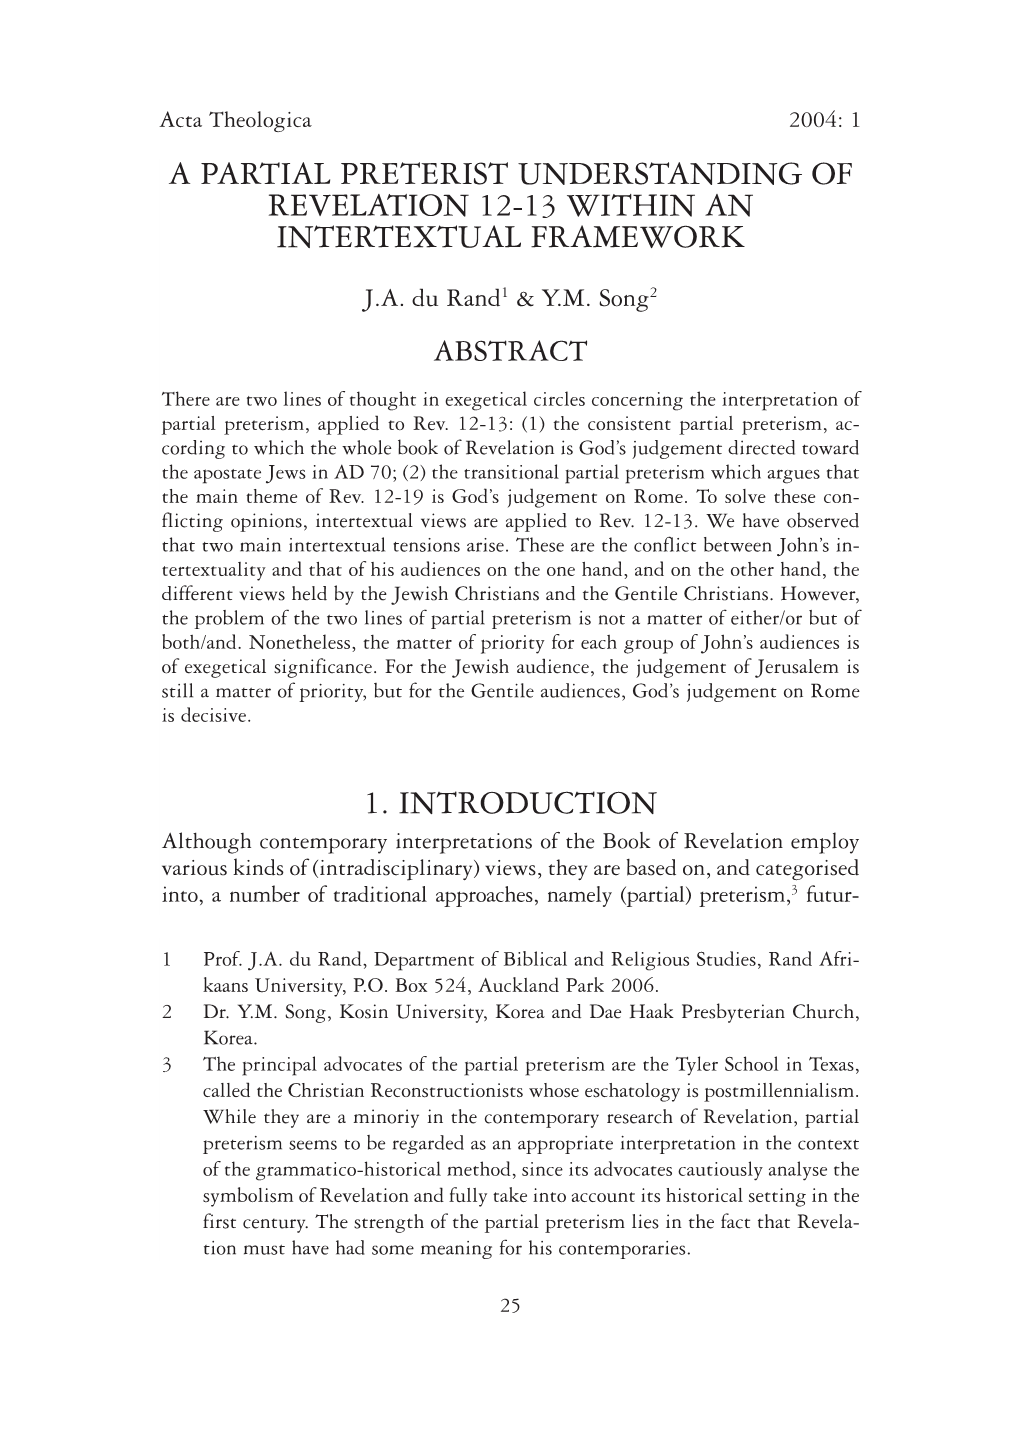 A Partial Preterist Understanding of Revelation 12-13 Within an Intertextual Framework